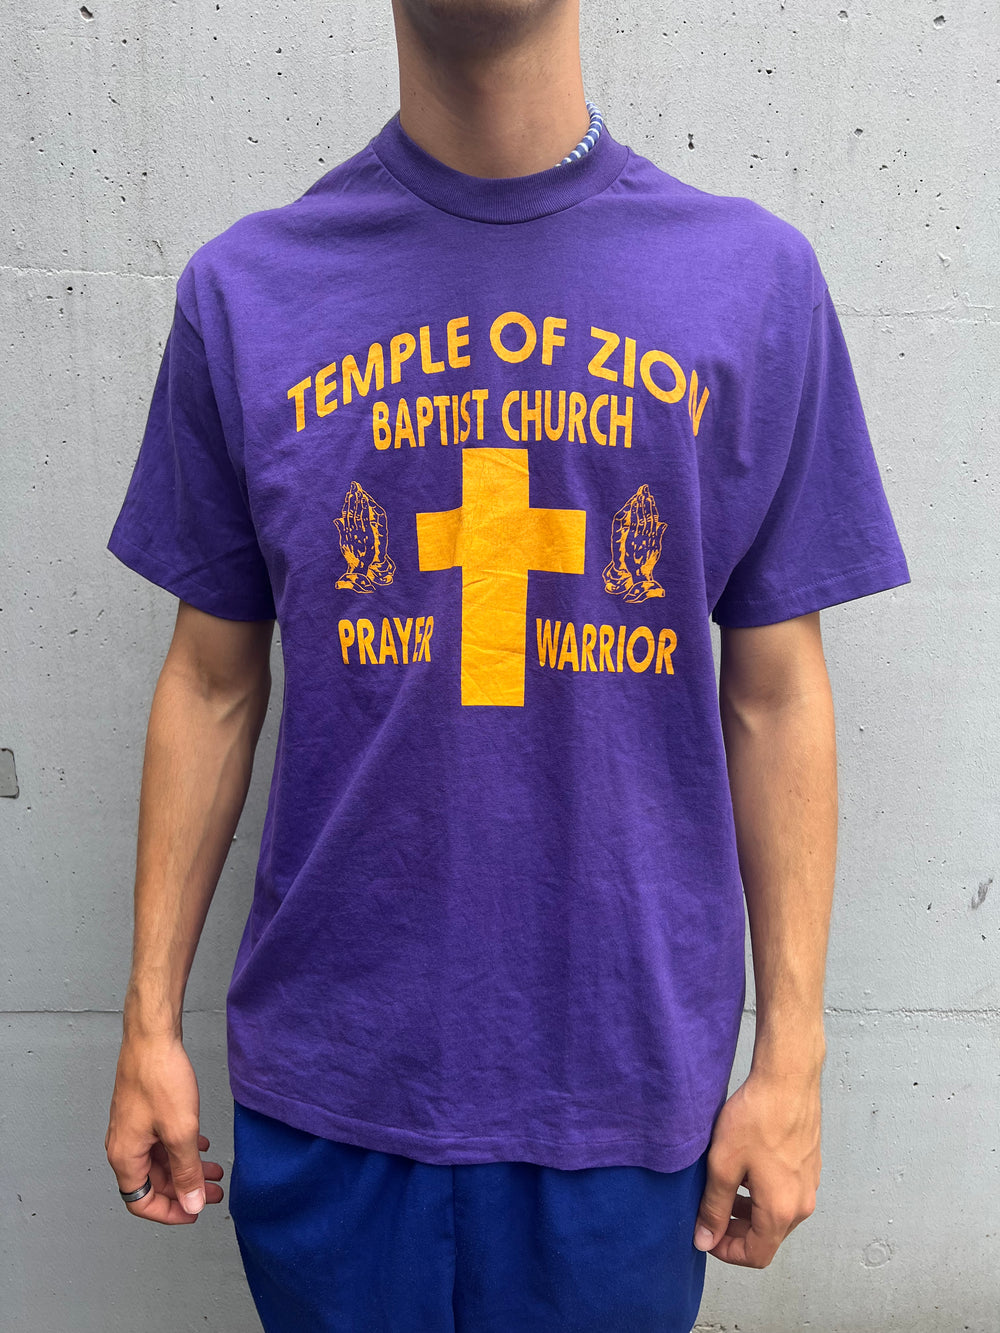 Vintage 90s single stitched T-Shirt Temple of Zion Baptist Church Prayer Warrior (XL)